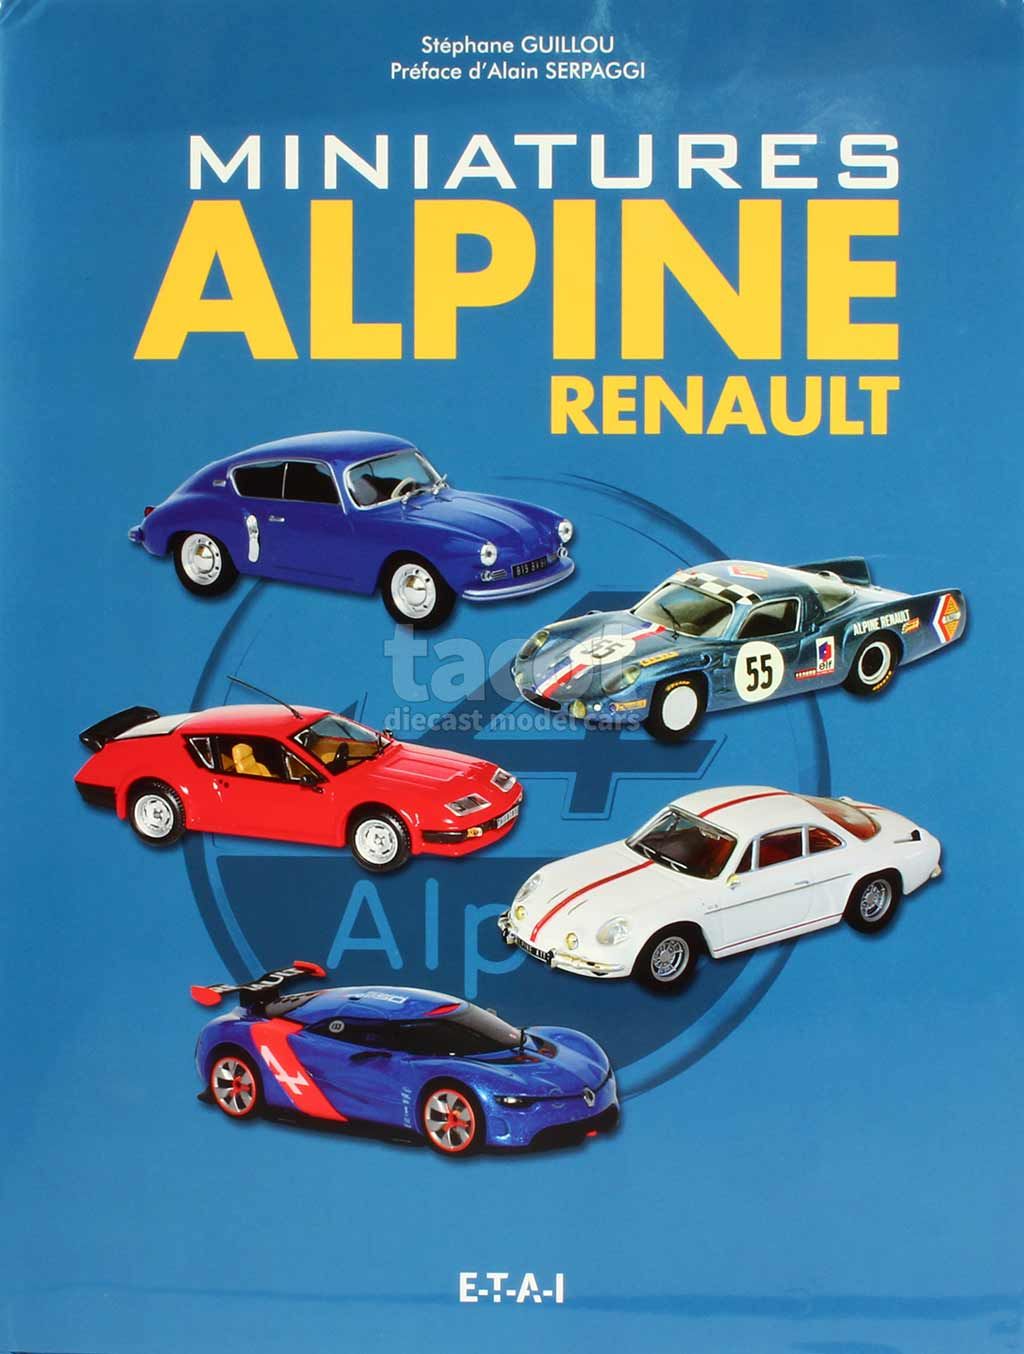 153 Alpine Miniatures Alpine Renault